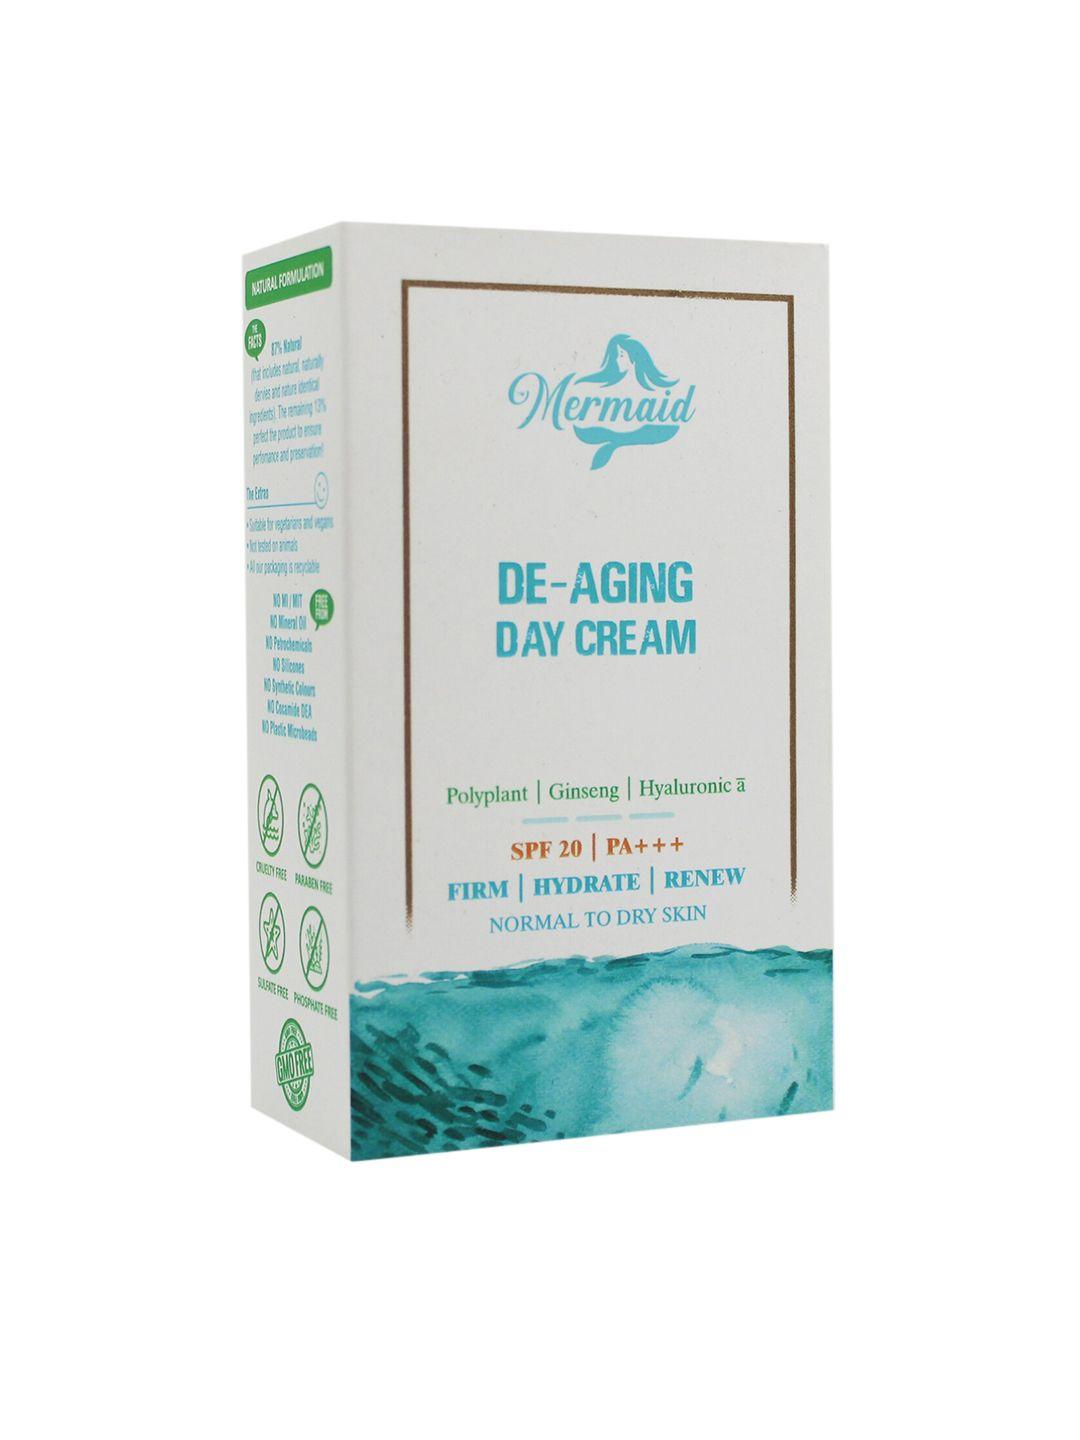 mermaid unisex de-aging night cream, with polyplant marine, ginseng & hyaluronic acid.